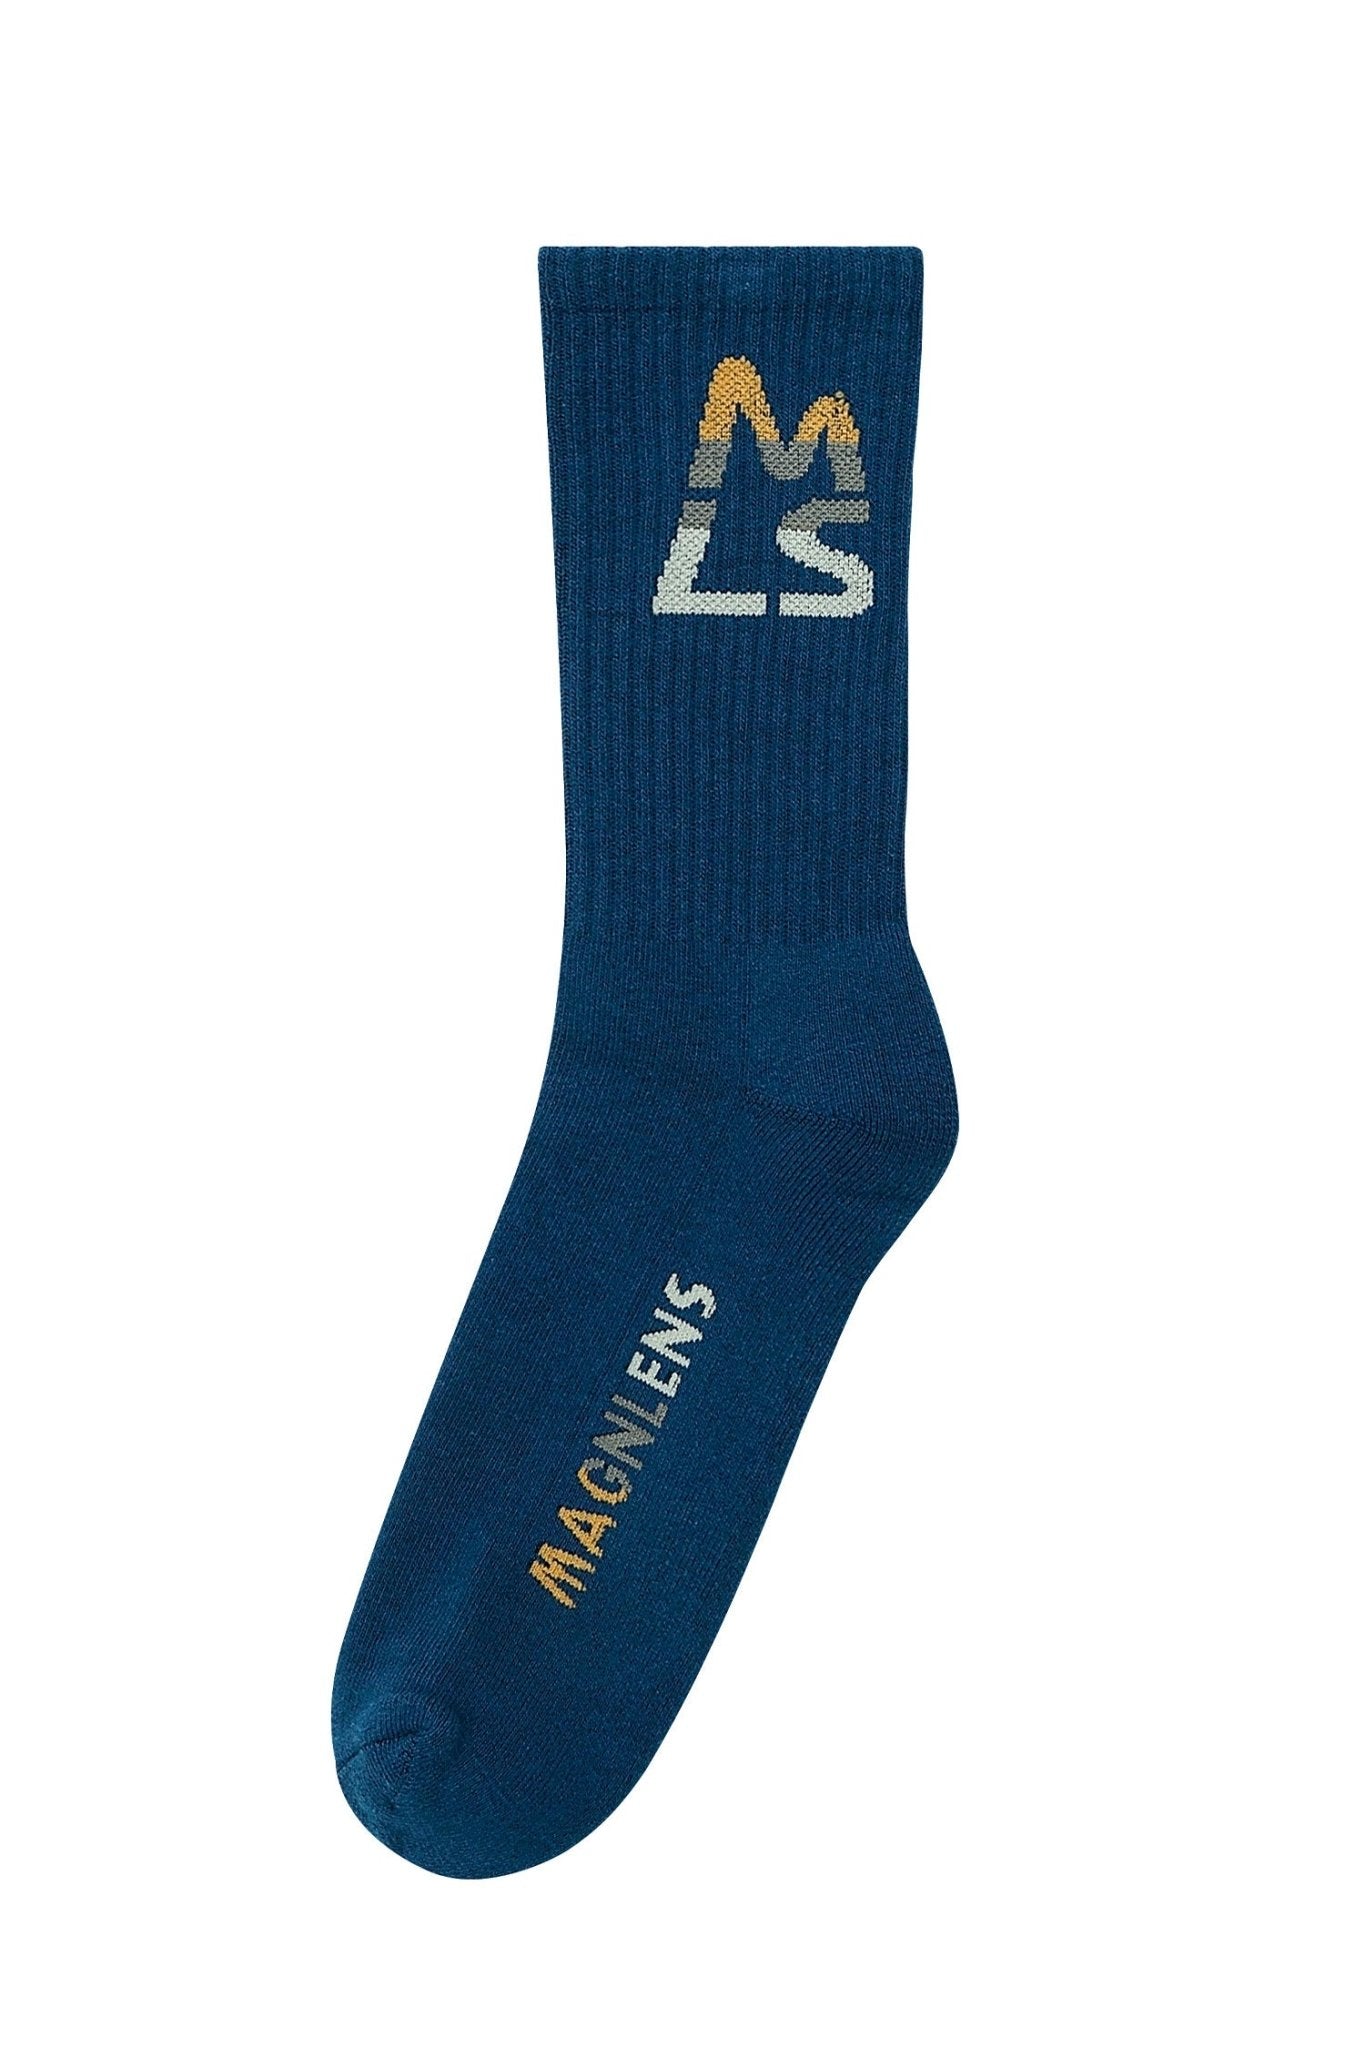 Long Crew Socks - Magnlens